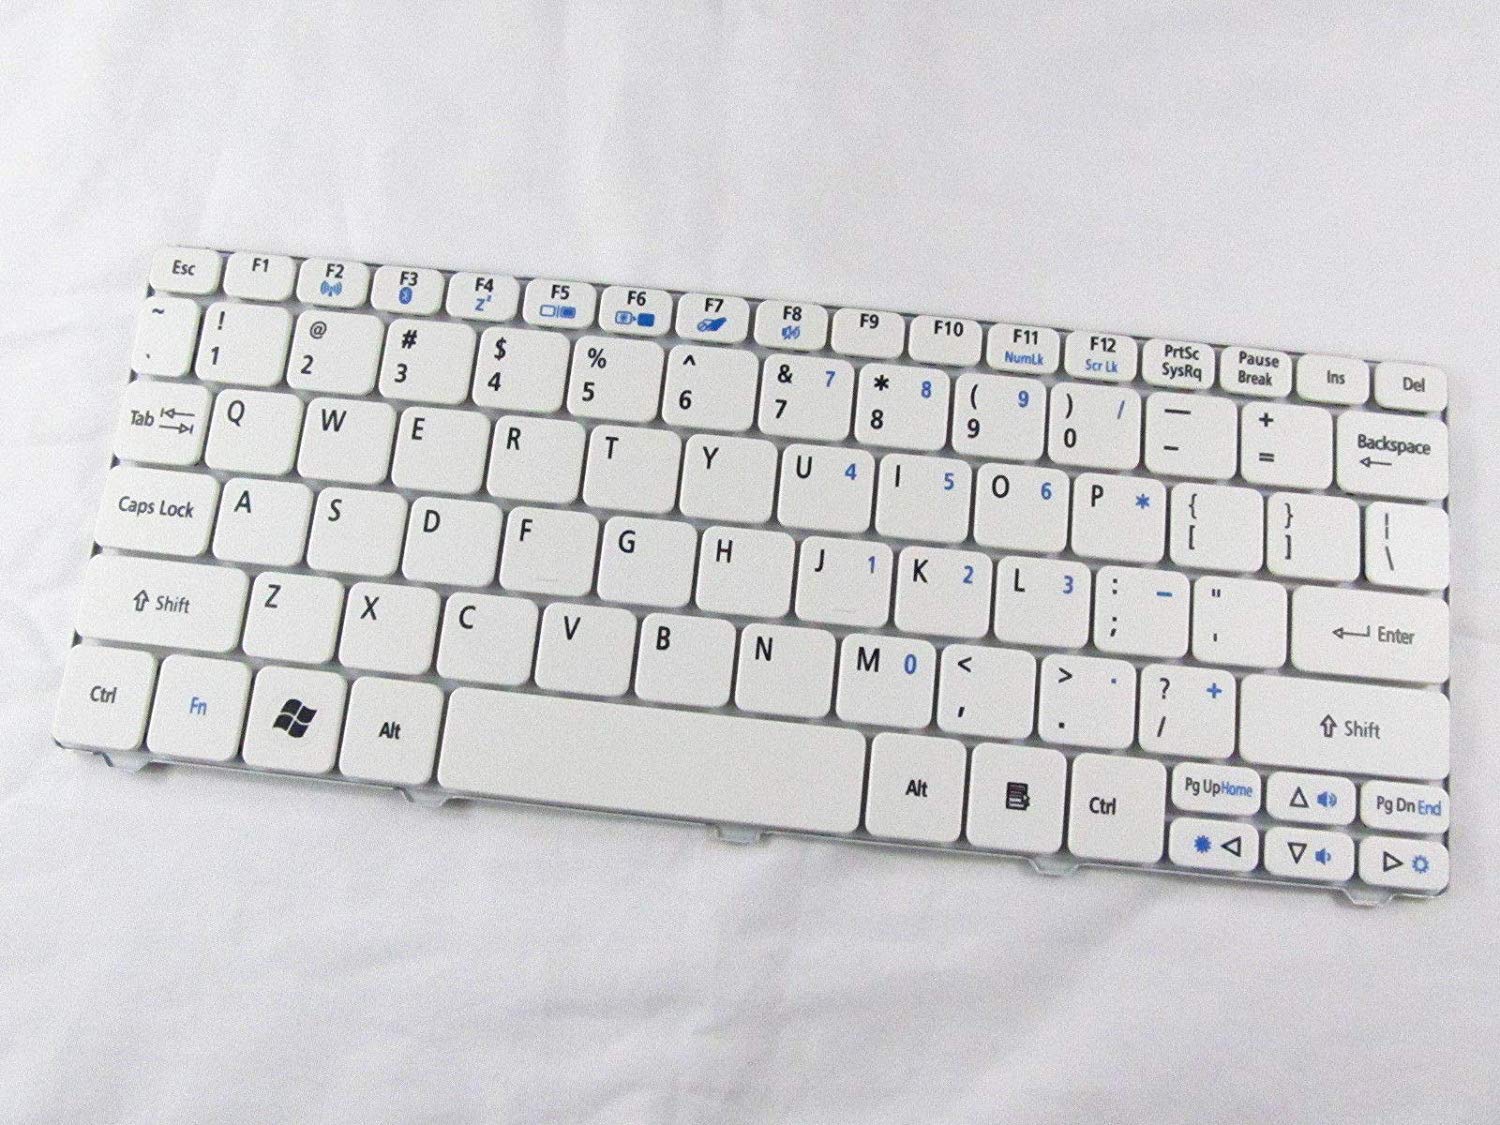 WISTAR Laptop Keyboard Compatible for Acer Aspire One D255 D255E D257 D260 D270 532H NAV50 {White}